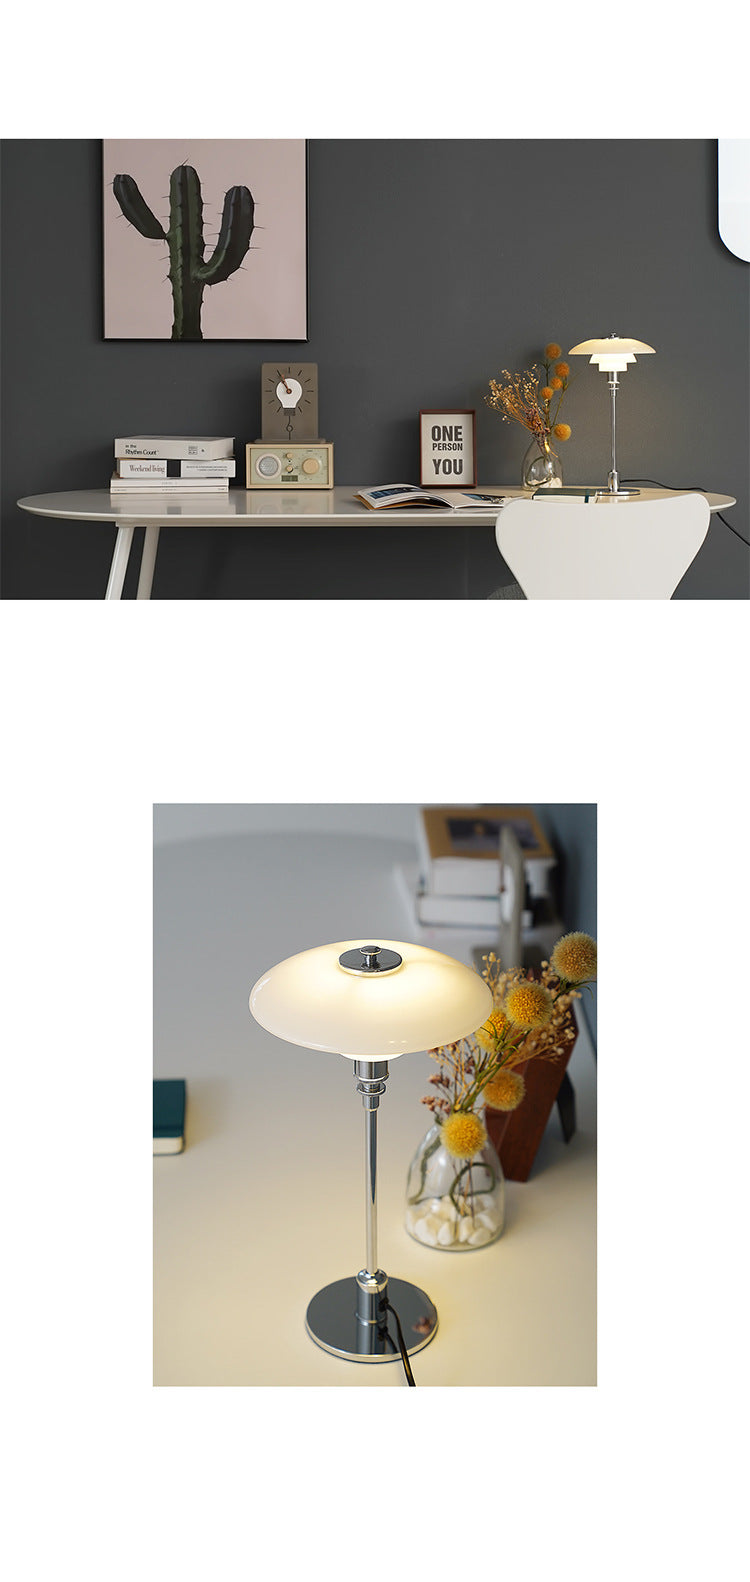 Signi - Danish Style Lamp